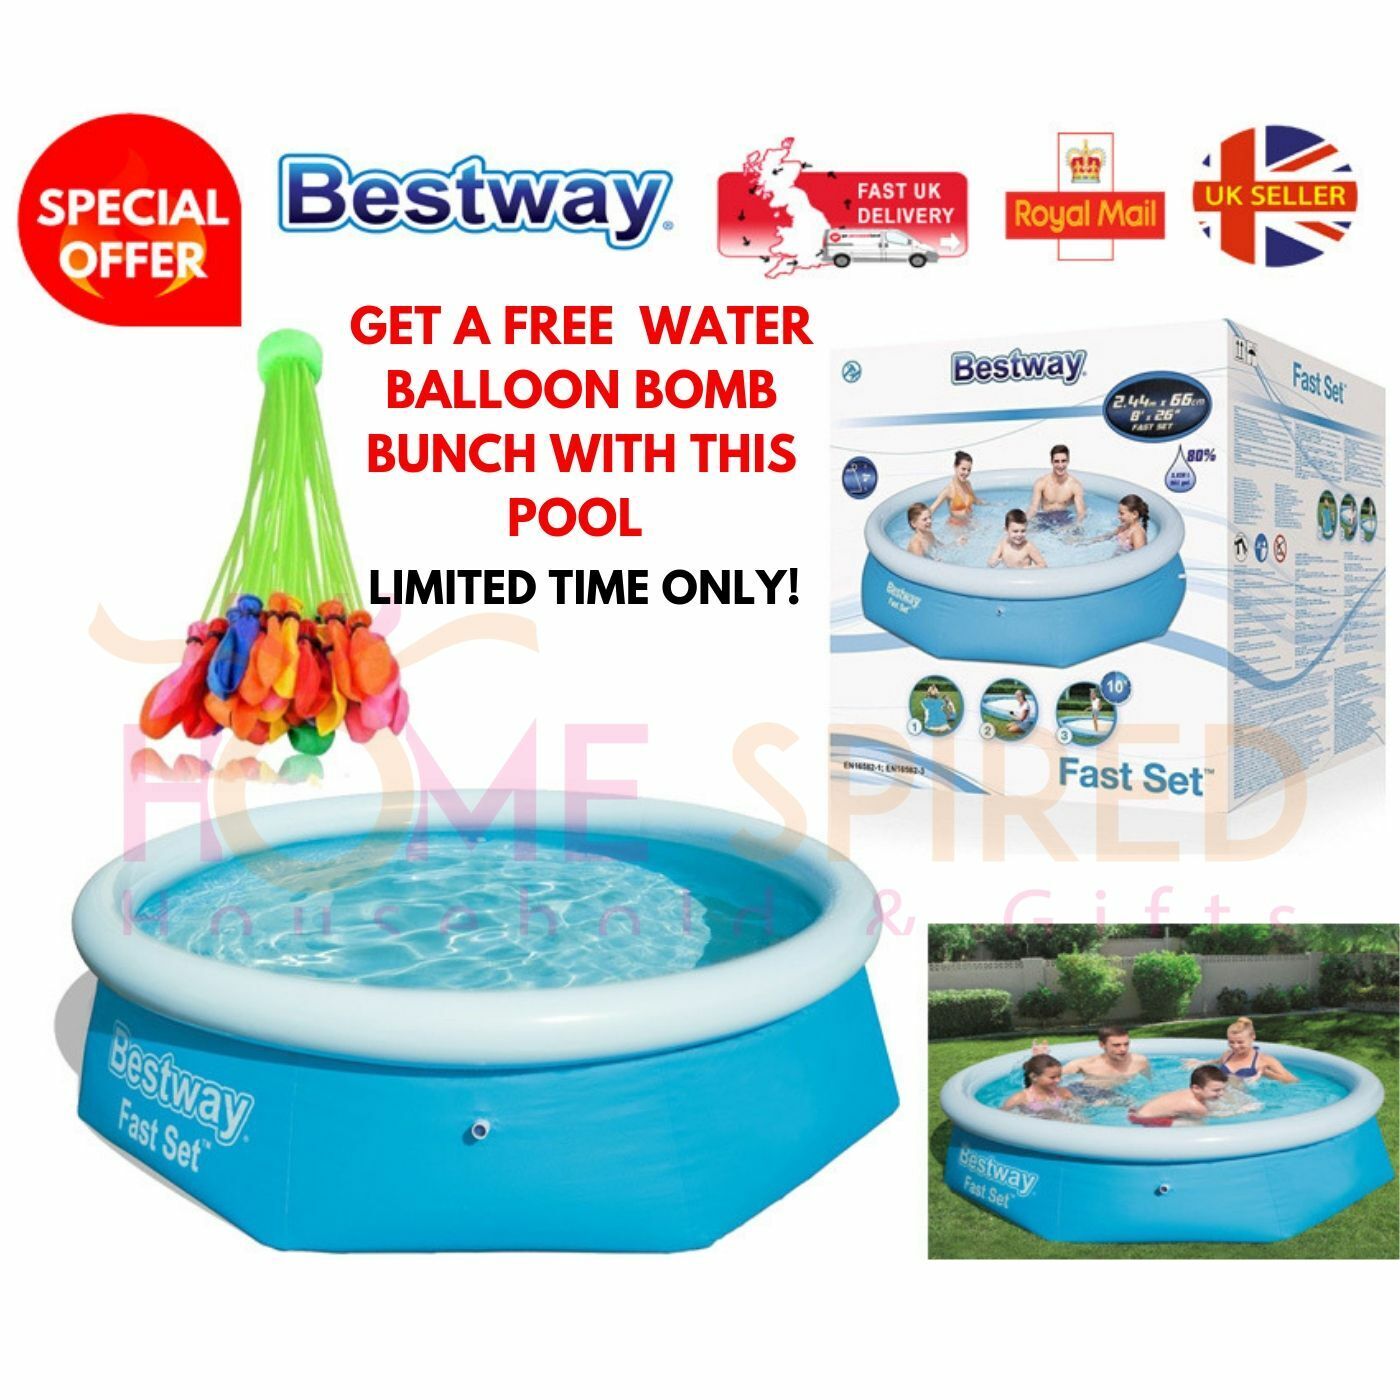 Bestway 8ft Fast Set Family Swimming Pool With Free Water Balloons Postorder goedkoop